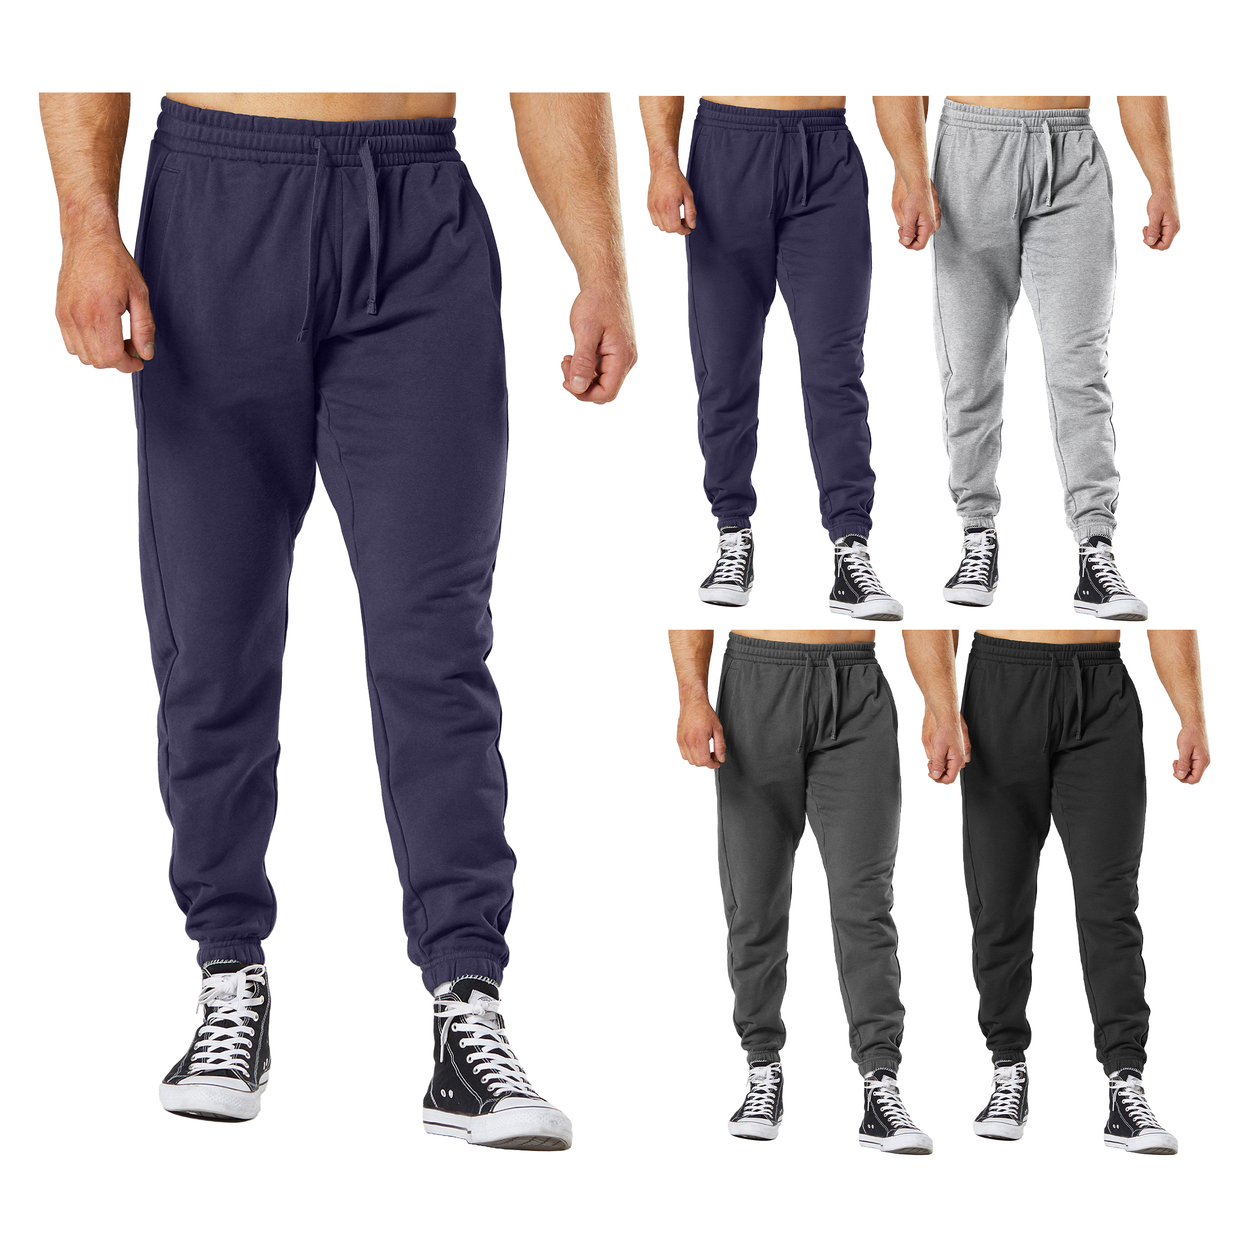 Multi-Pack: Men's Ultra-Soft Cozy Winter Warm Casual Fleece-Lined Sweatpants Jogger - 1-pack, Medium